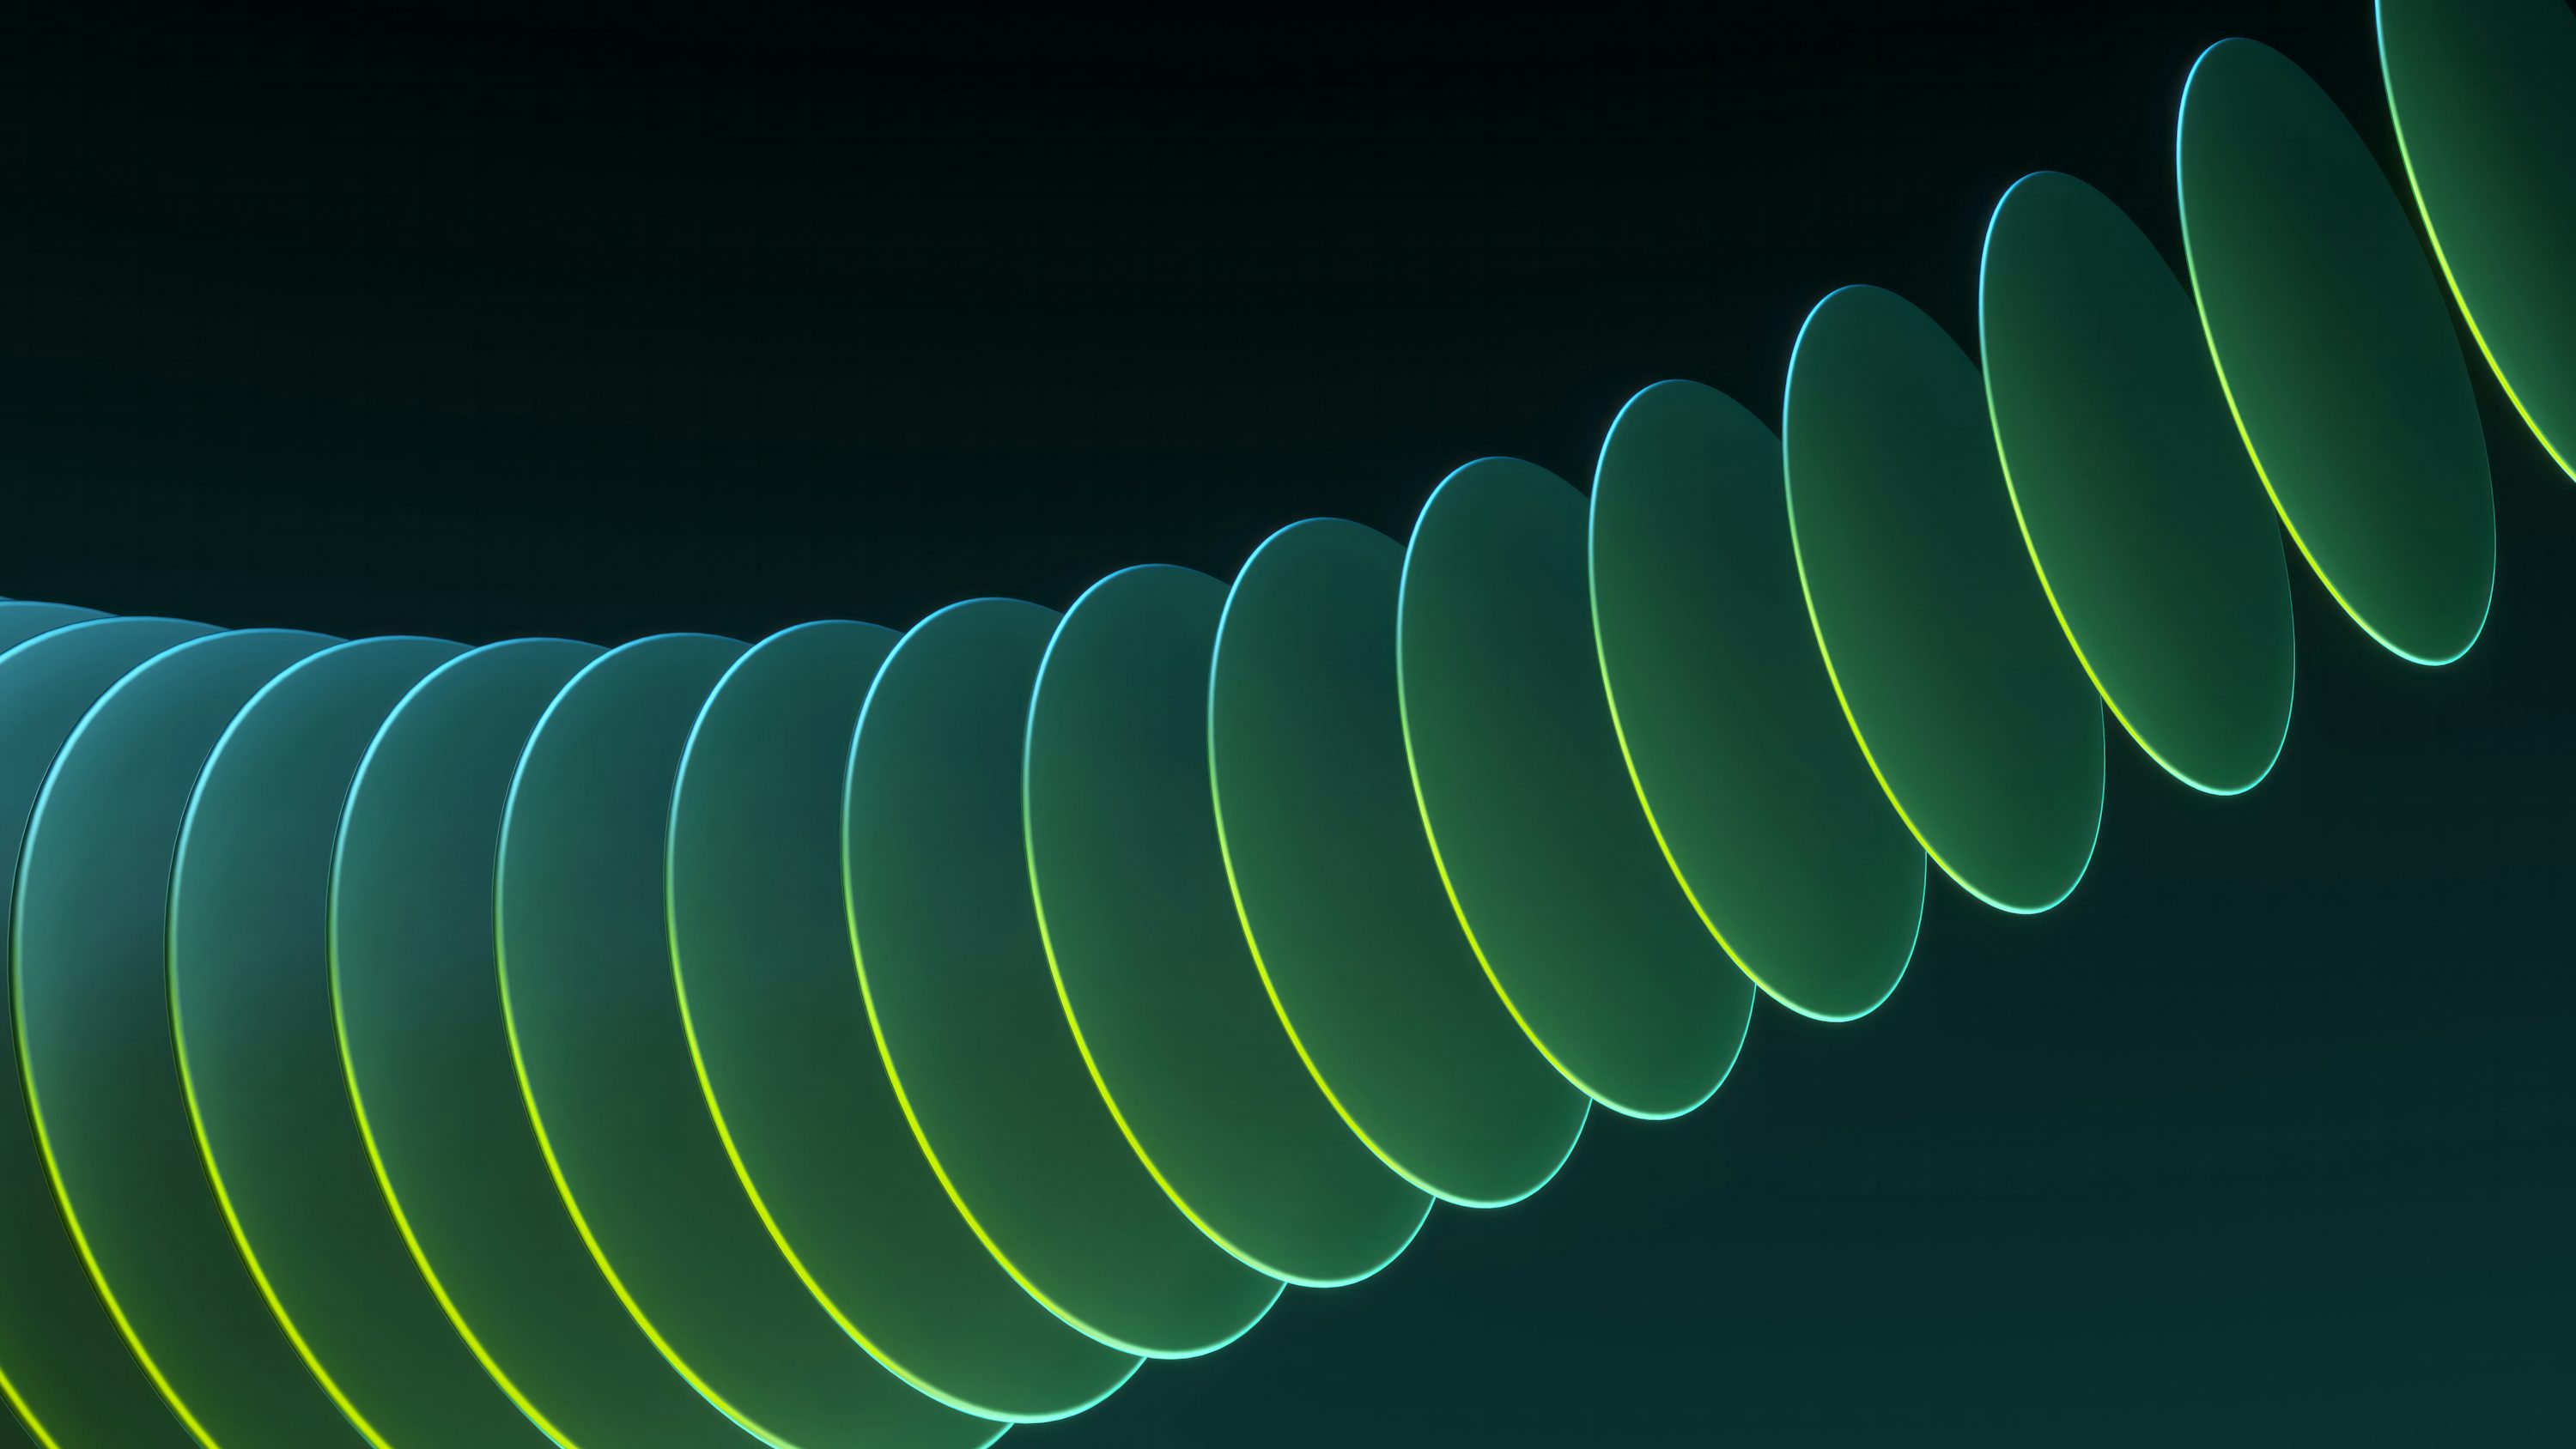 un'immagine astratta di una linea verde curva